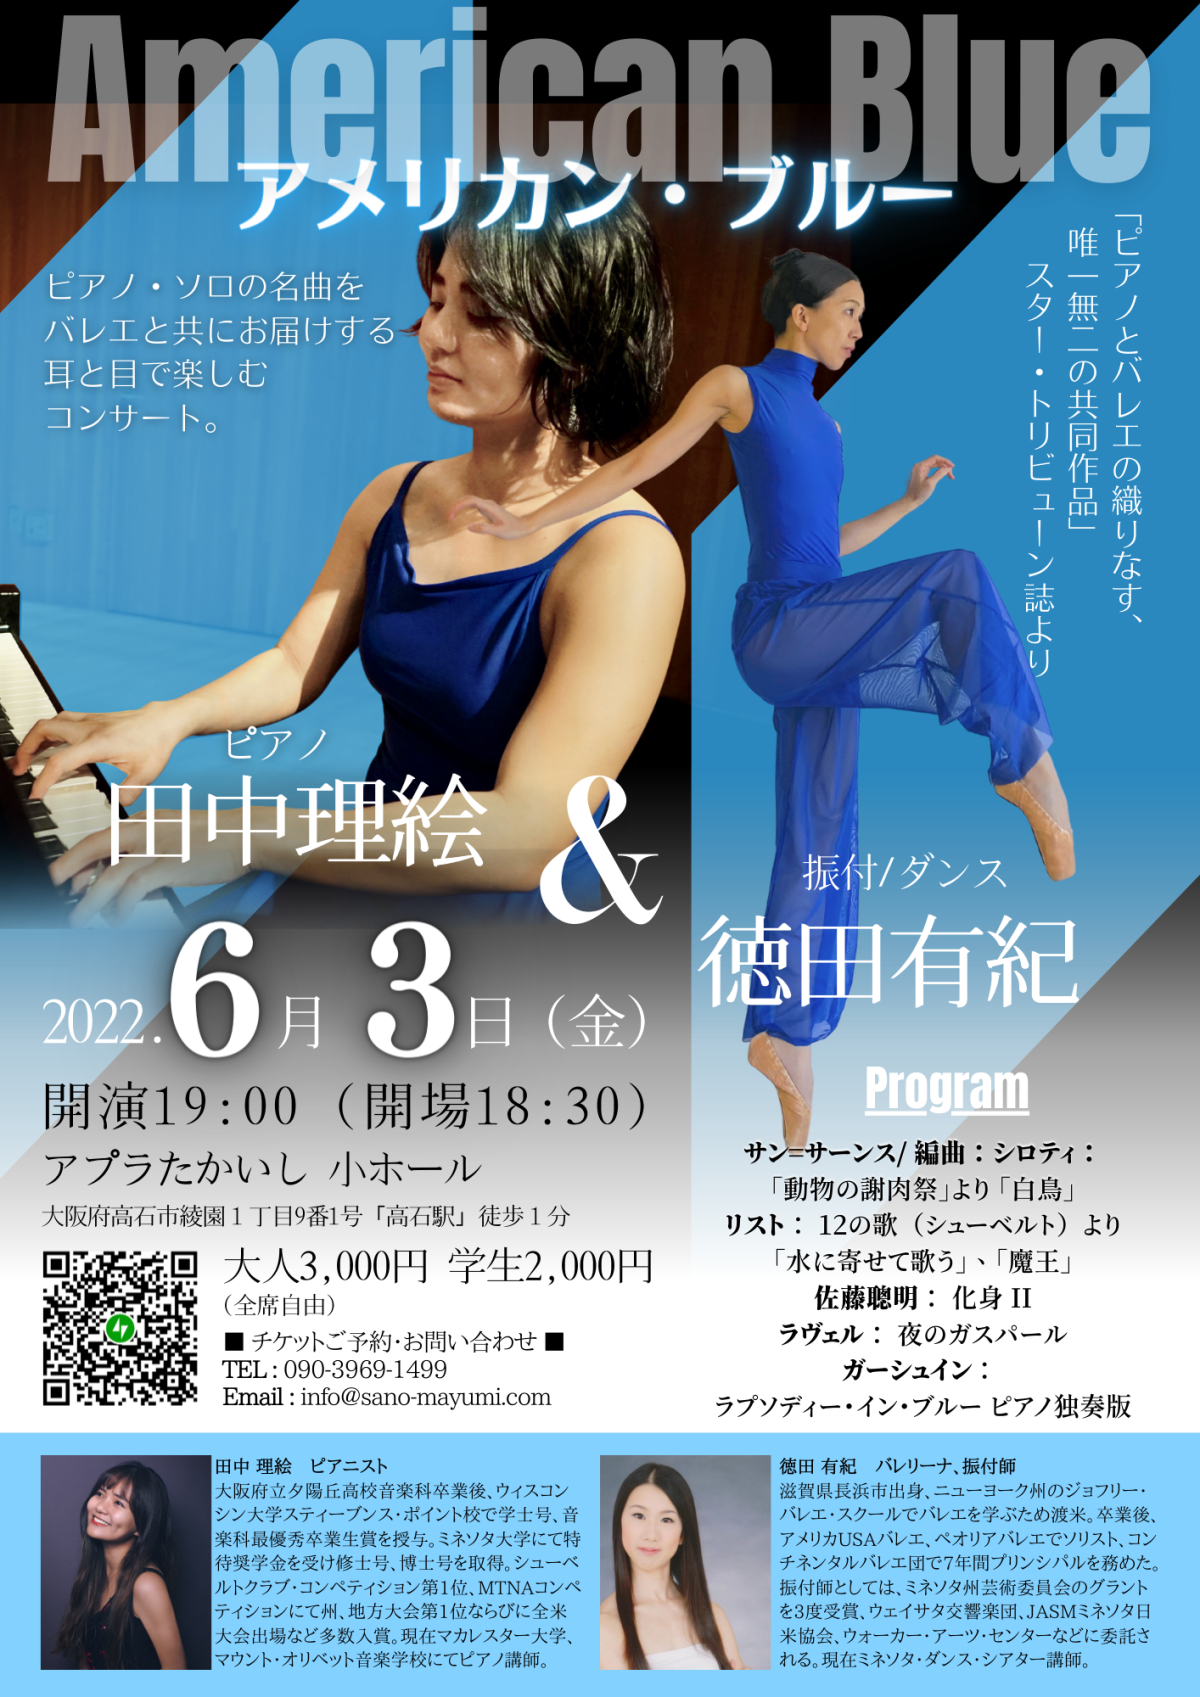 American Blue – Japan Tour – Osaka, 6/3/22